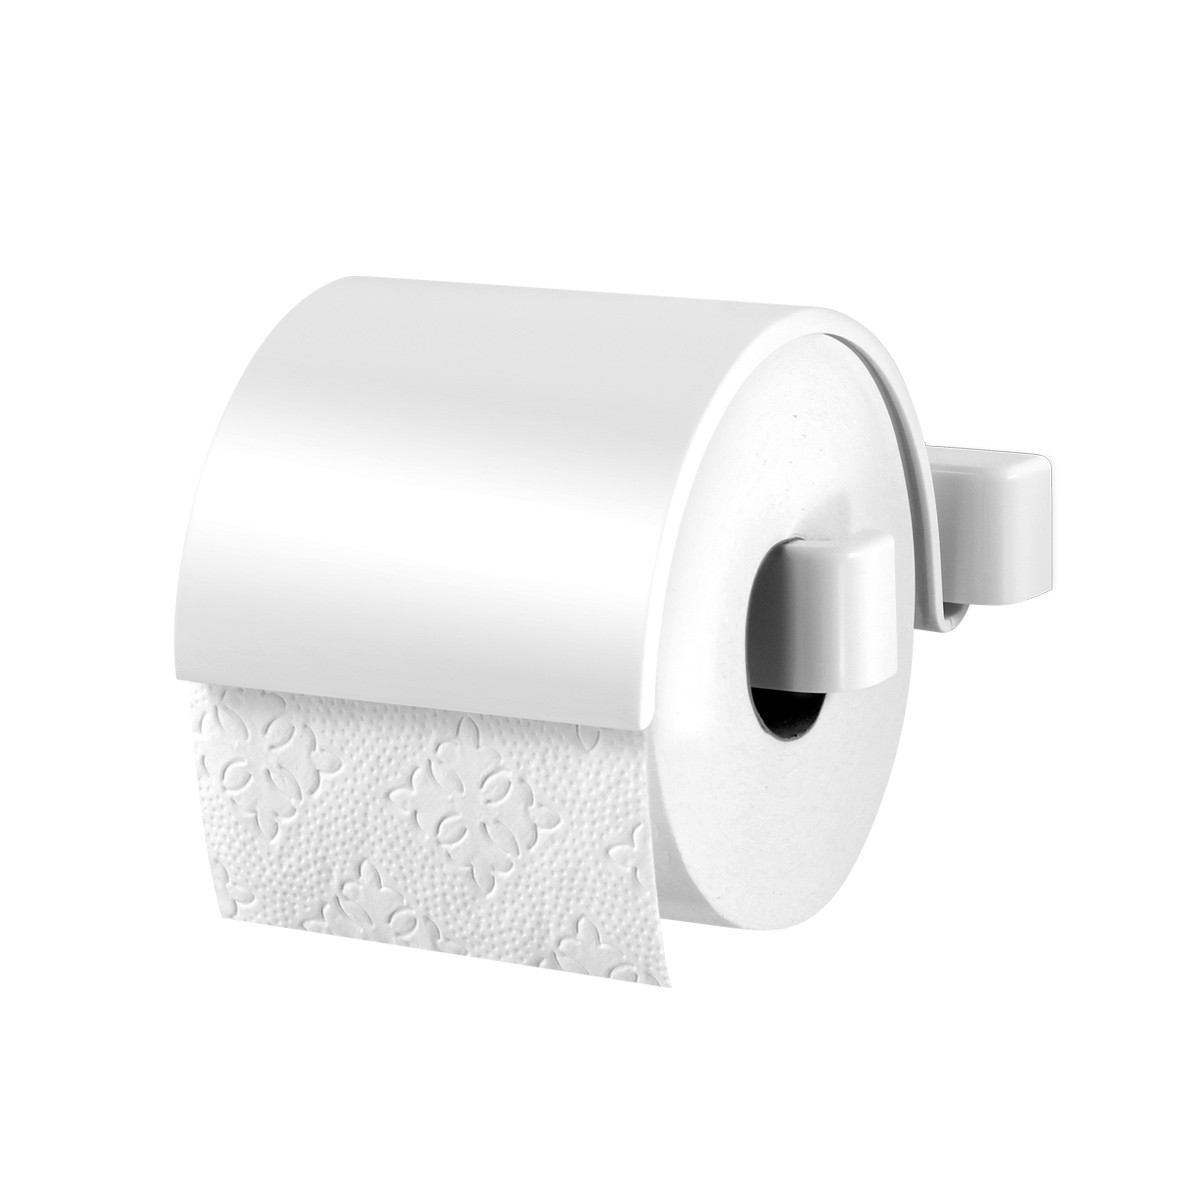 Uchwyt na papier toaletowy LAGOON